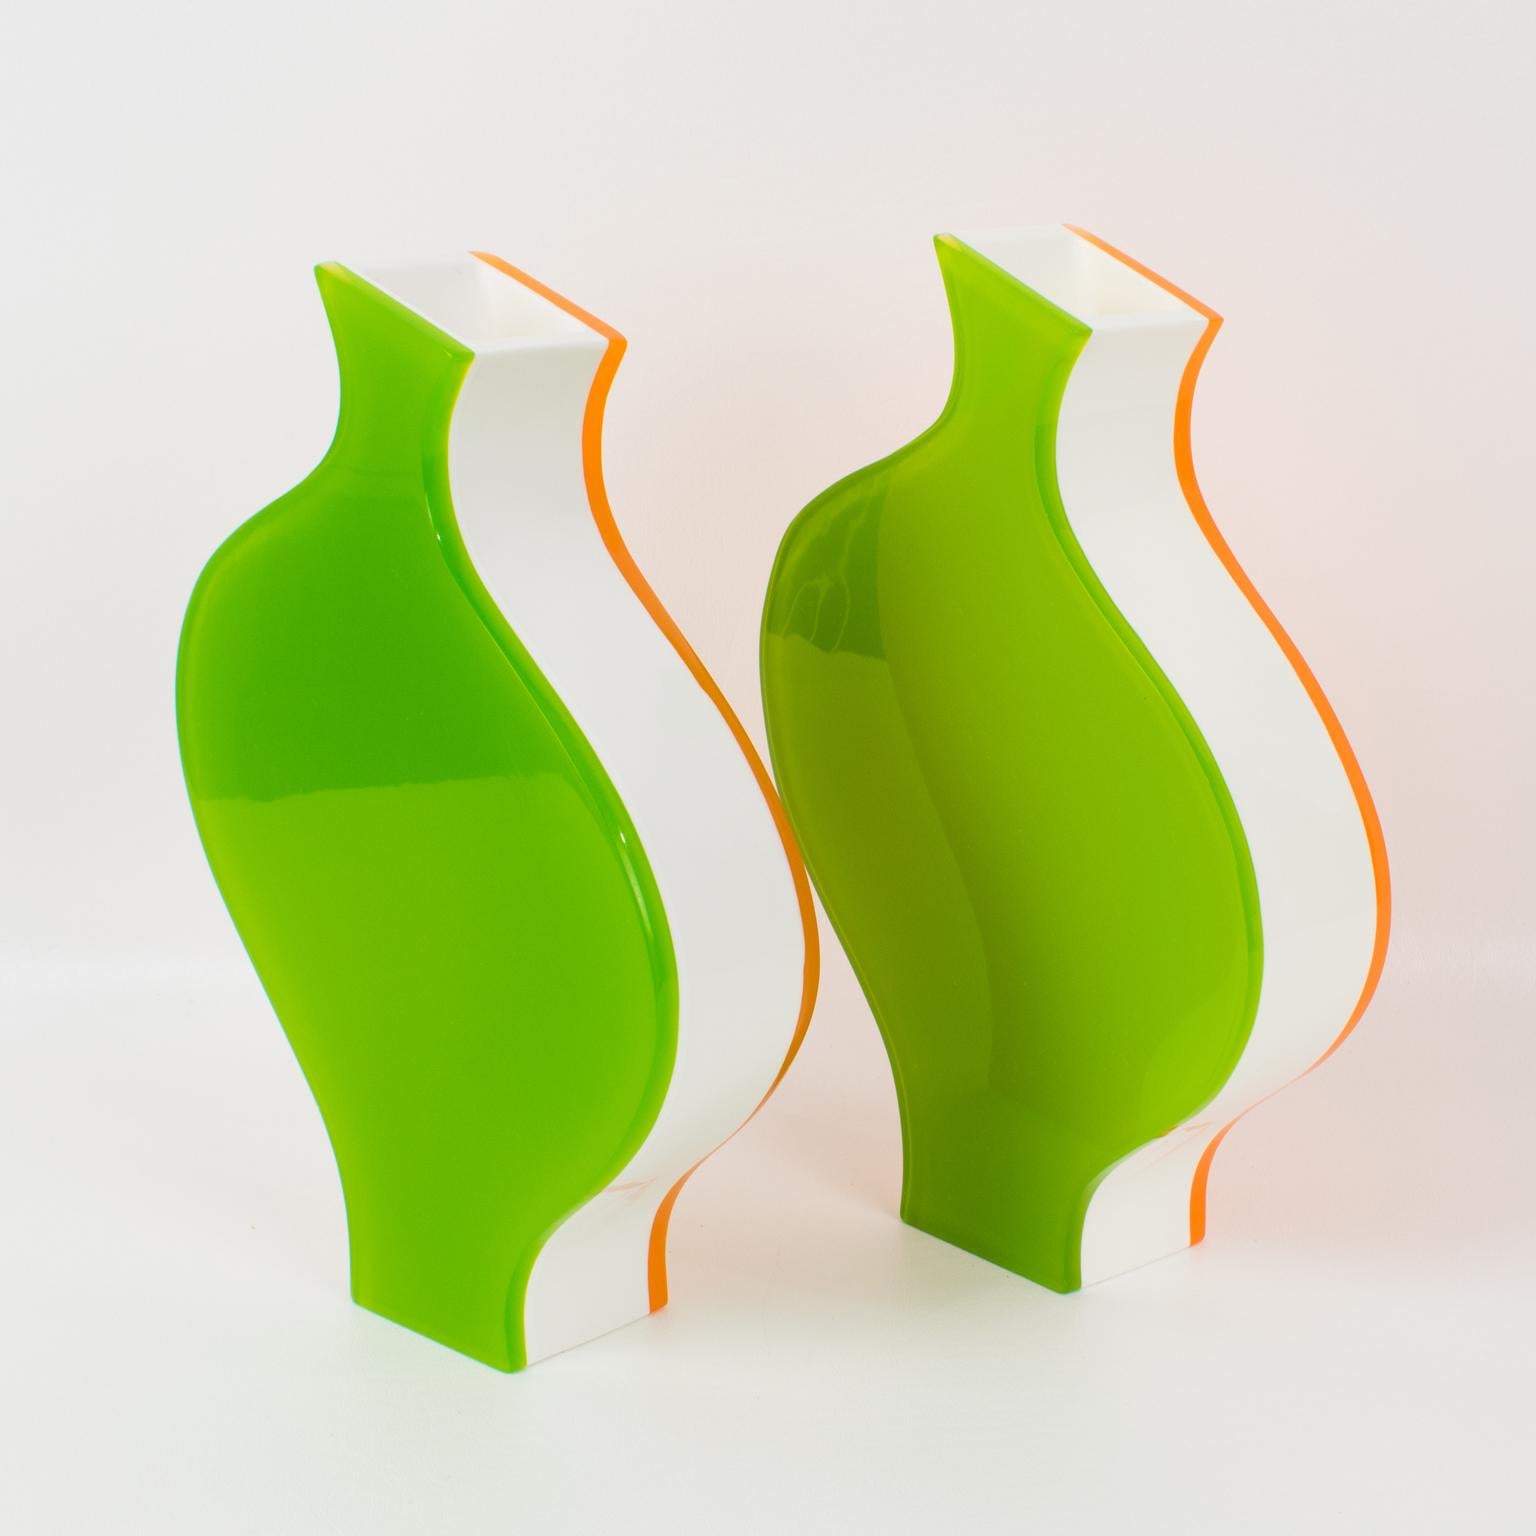 German Villeroy & Boch Orange and Green Plexiglass or Lucite Vases, 1990s